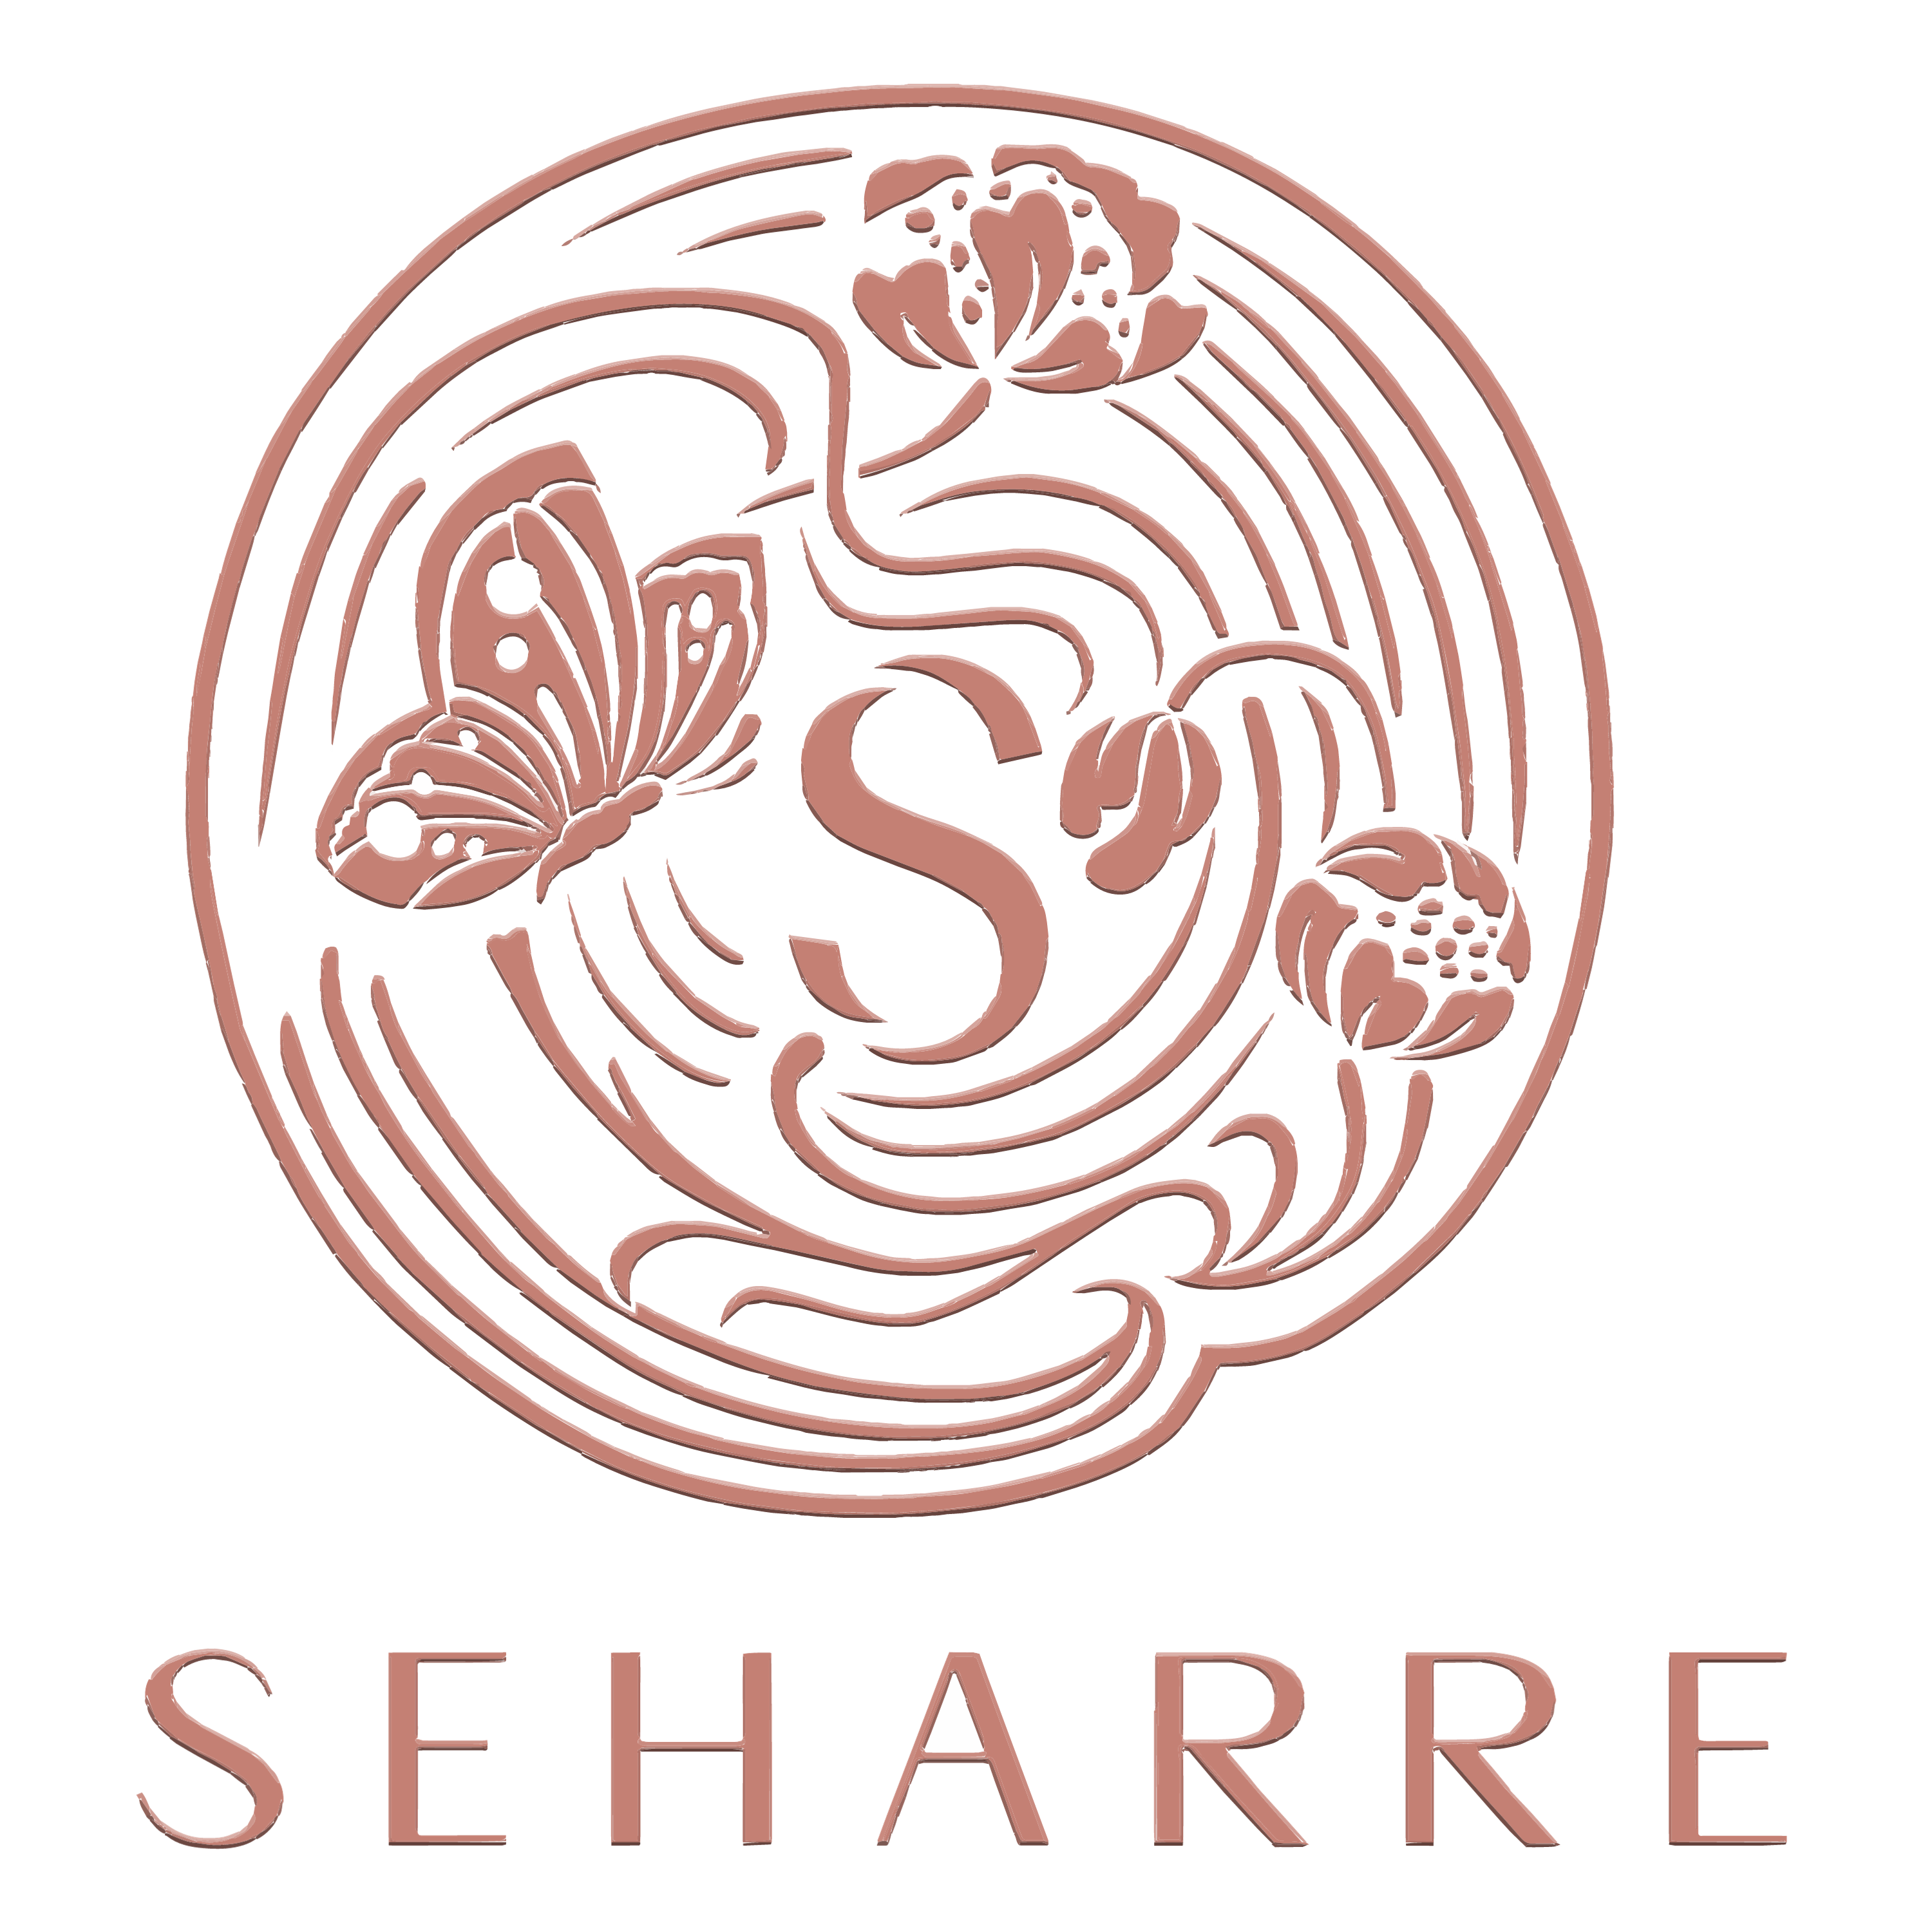 Seharre by Sahithee Reddy